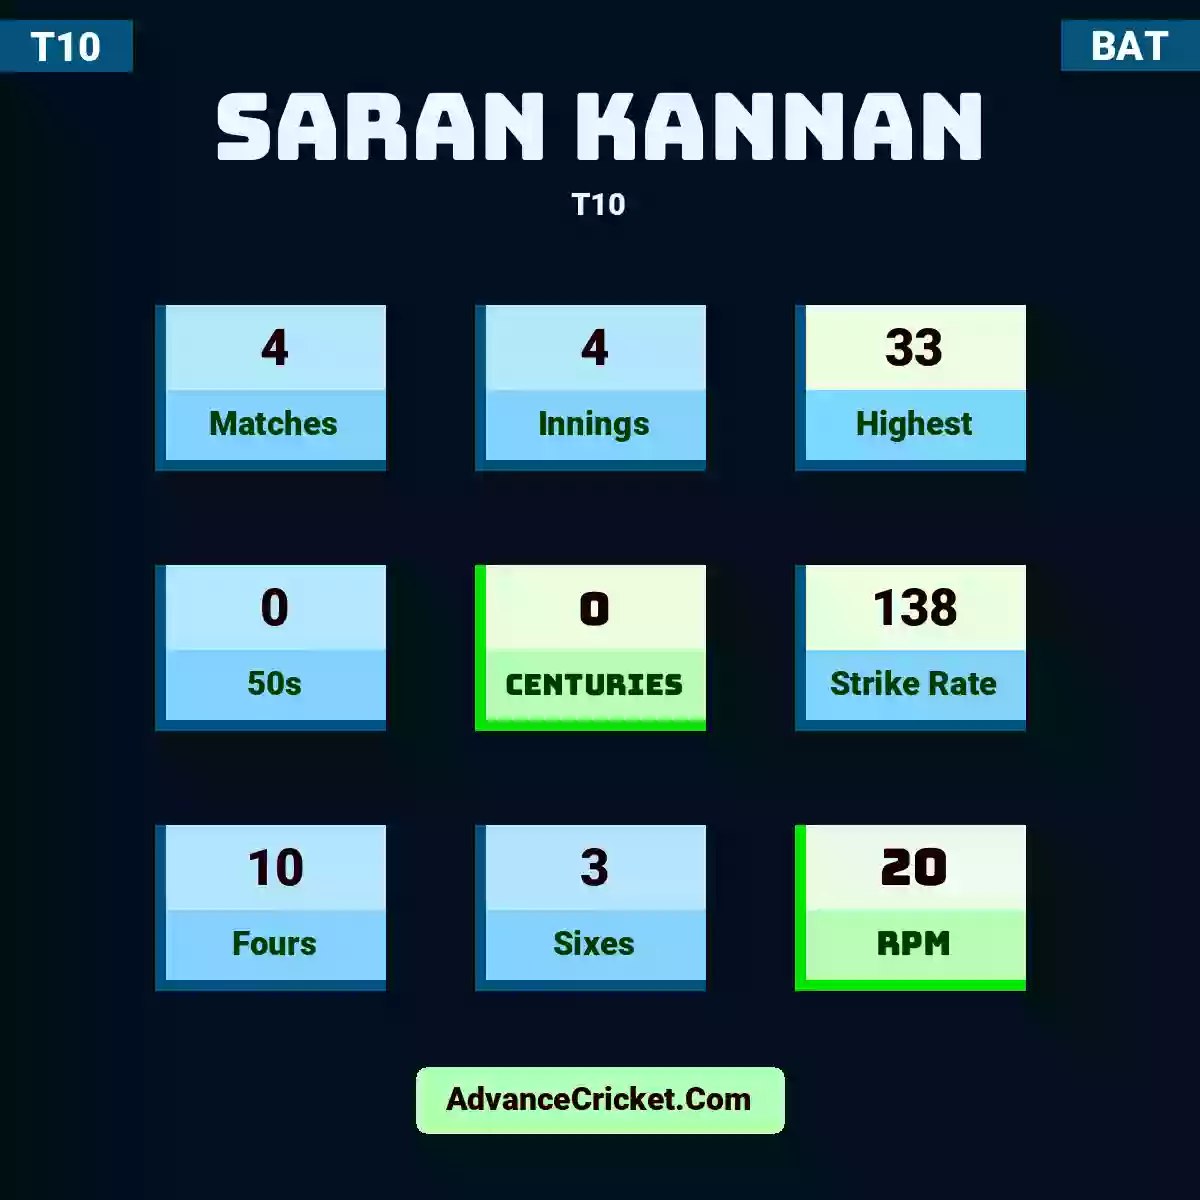 Saran Kannan T10 , Saran Kannan played 4 matches, scored 33 runs as highest, 0 half-centuries, and 0 centuries, with a strike rate of 138. S.Kannan hit 10 fours and 3 sixes, with an RPM of 20.